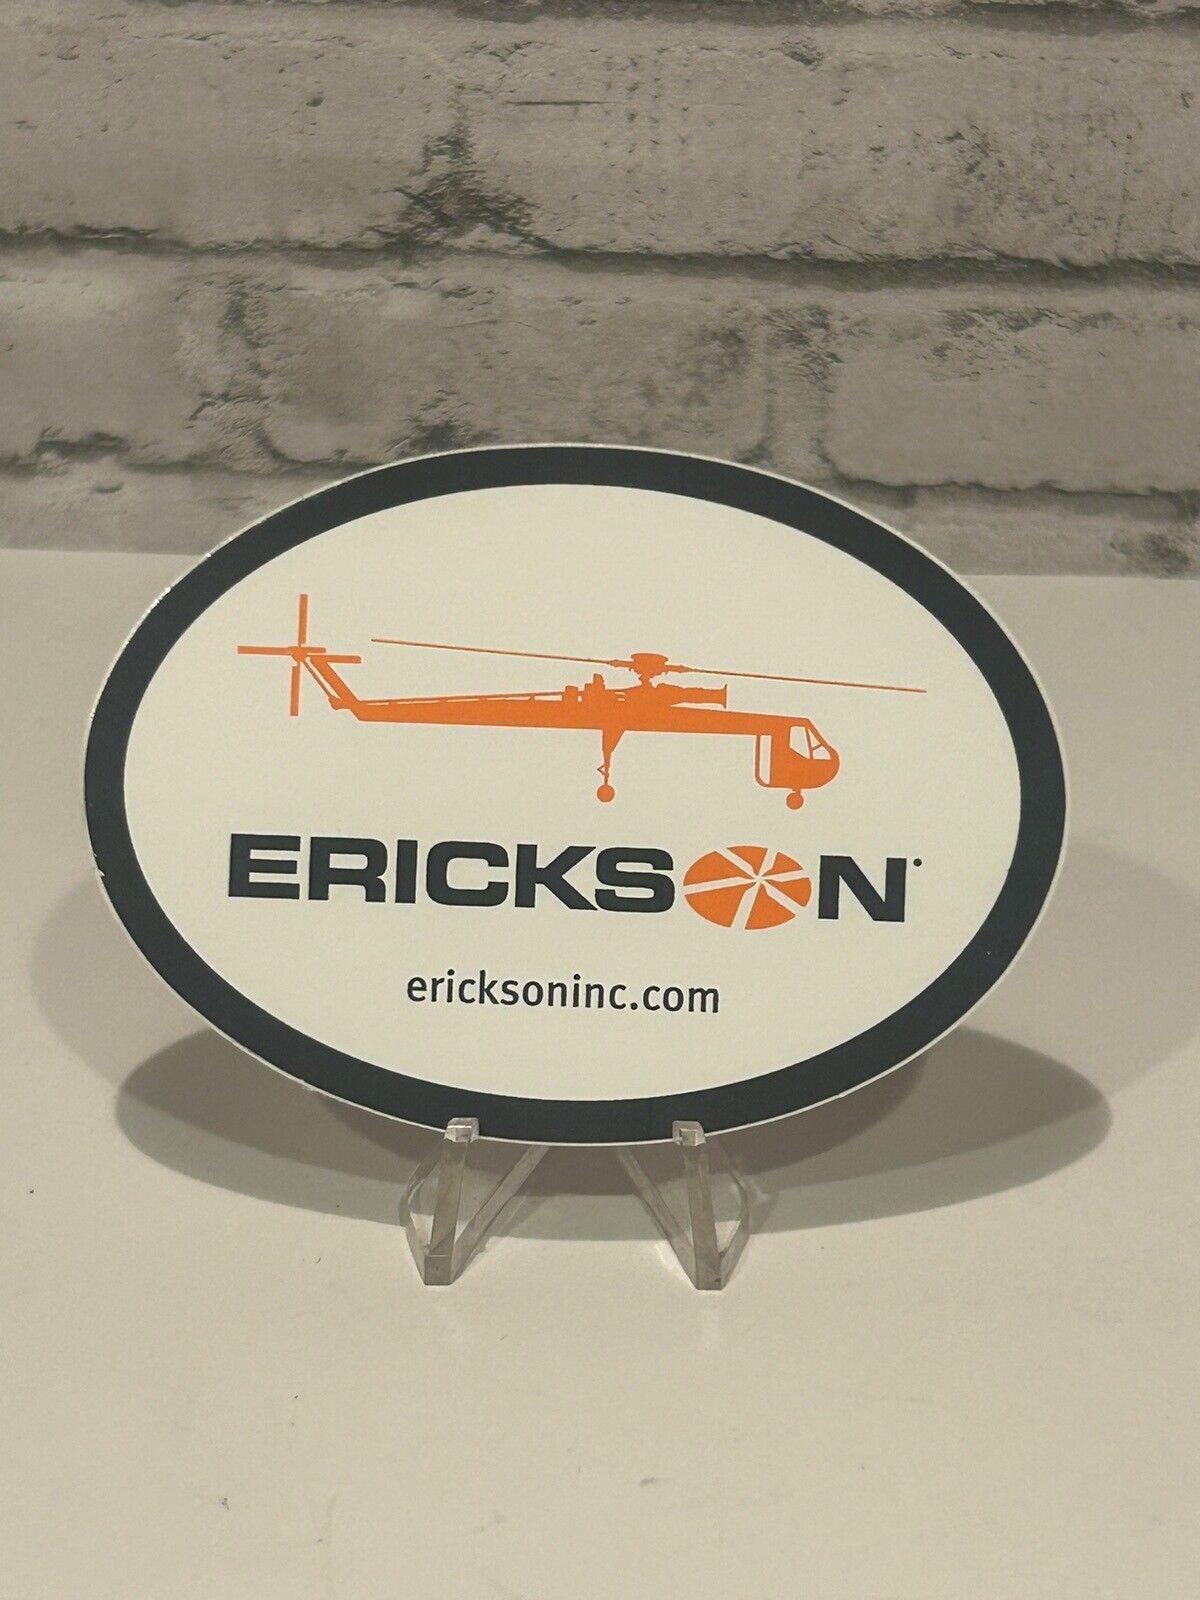 Erickson Air Crane Helicopter Lift Operating Engineers Hardhat Sticker Hard Hat